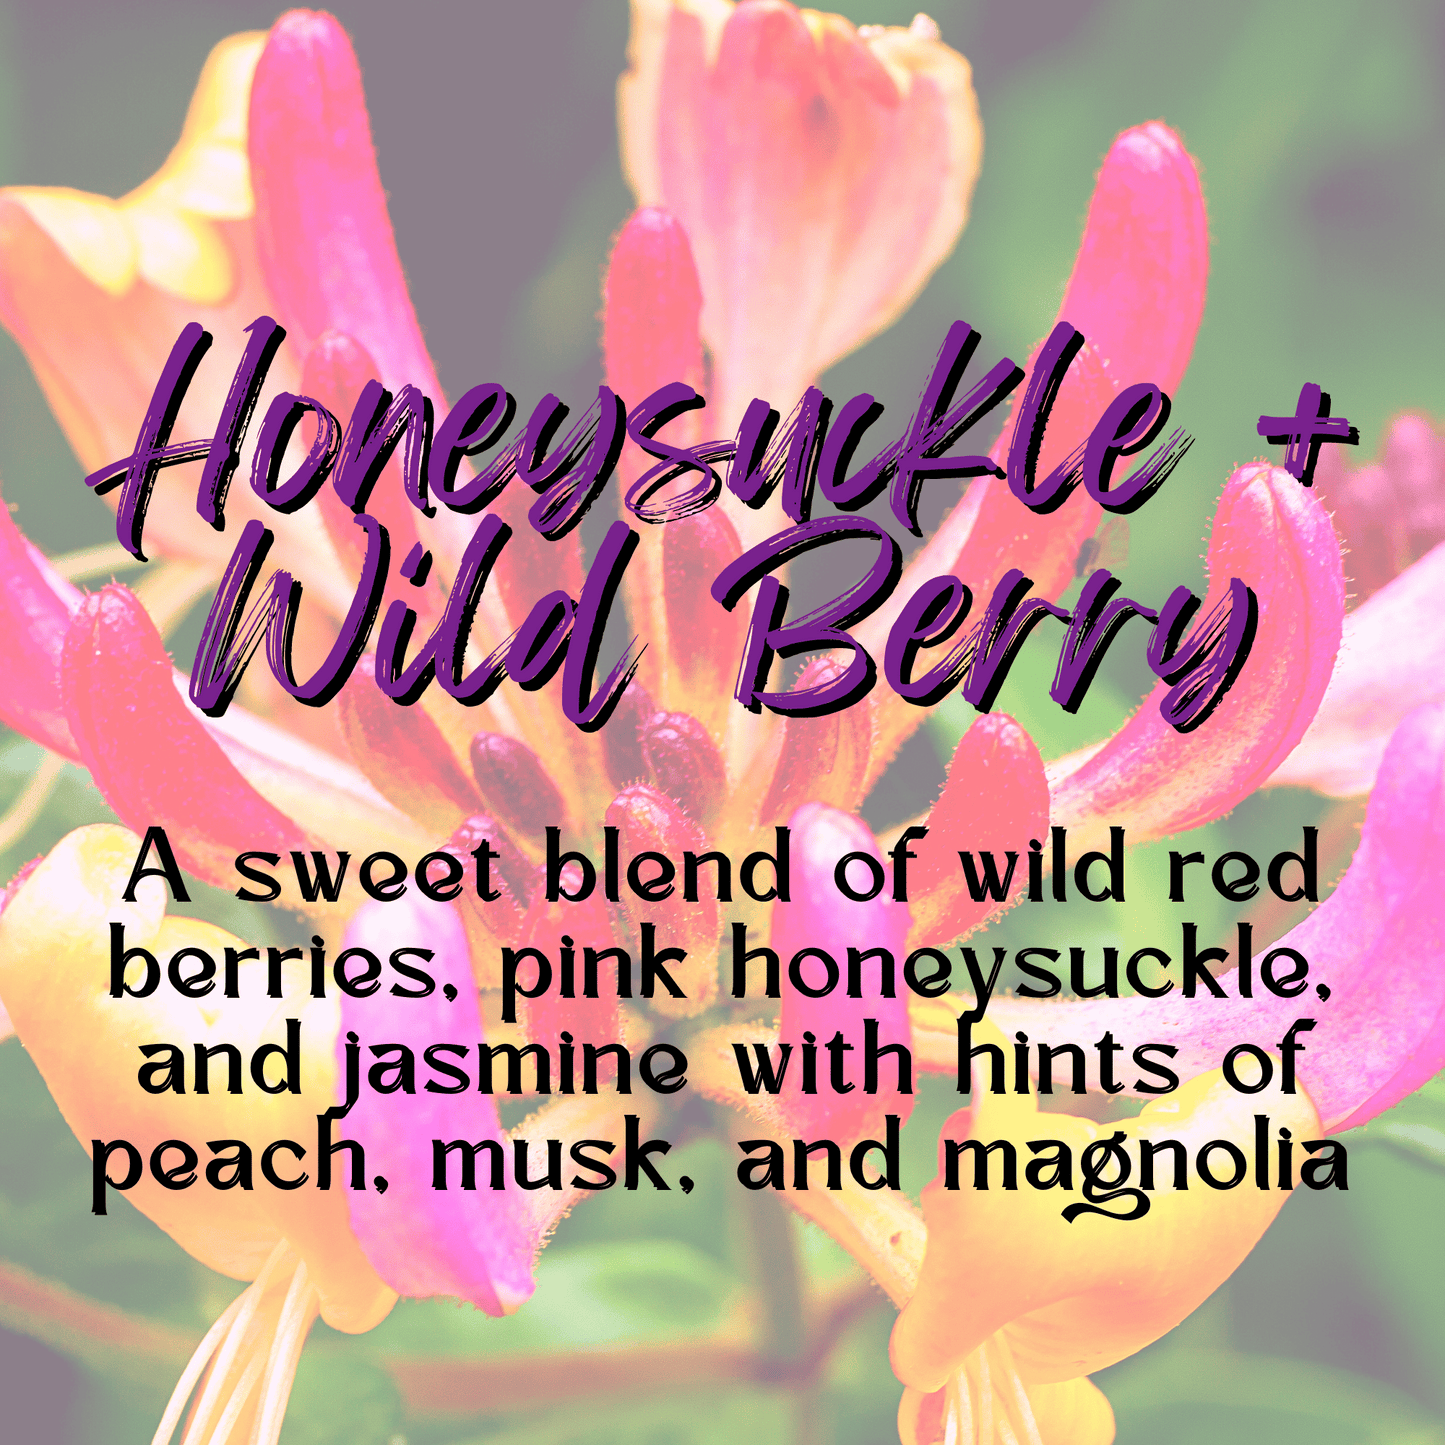 Hydrating Body + Hair Mist | Honeysuckle + Wild Berry | Choice of Size | Spray